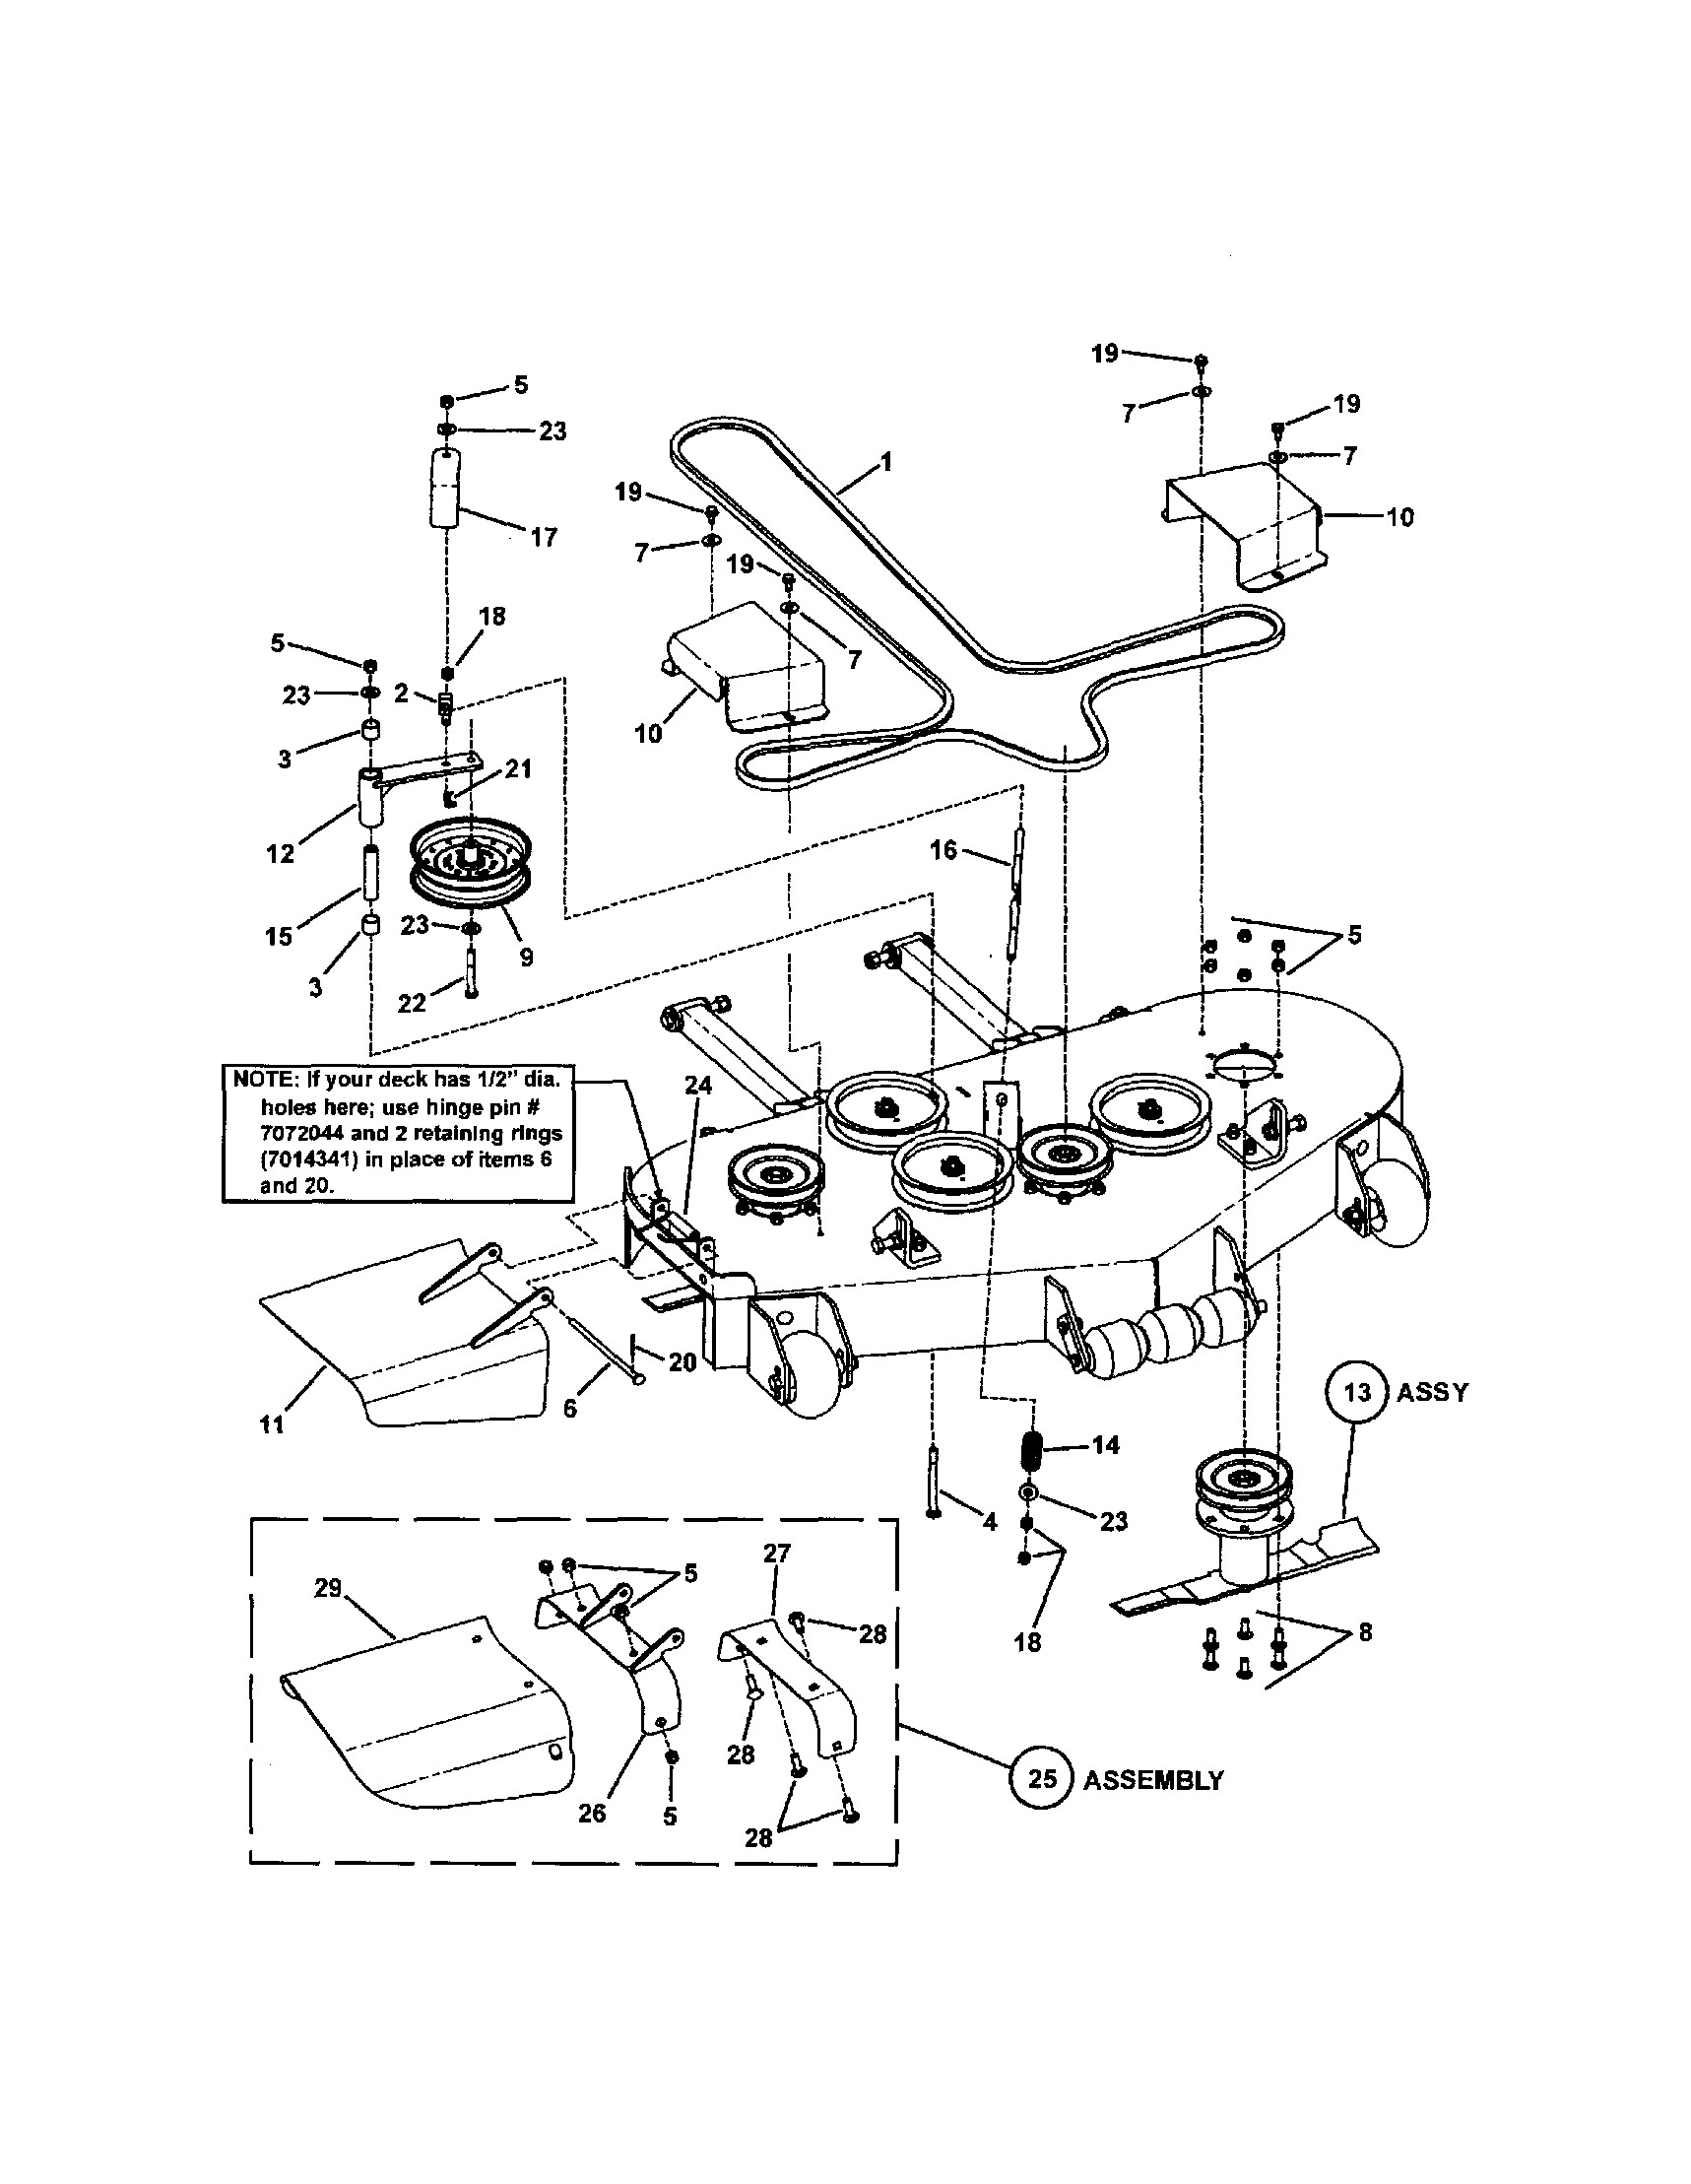 Ferris Mower Parts Diagram | My Wiring DIagram